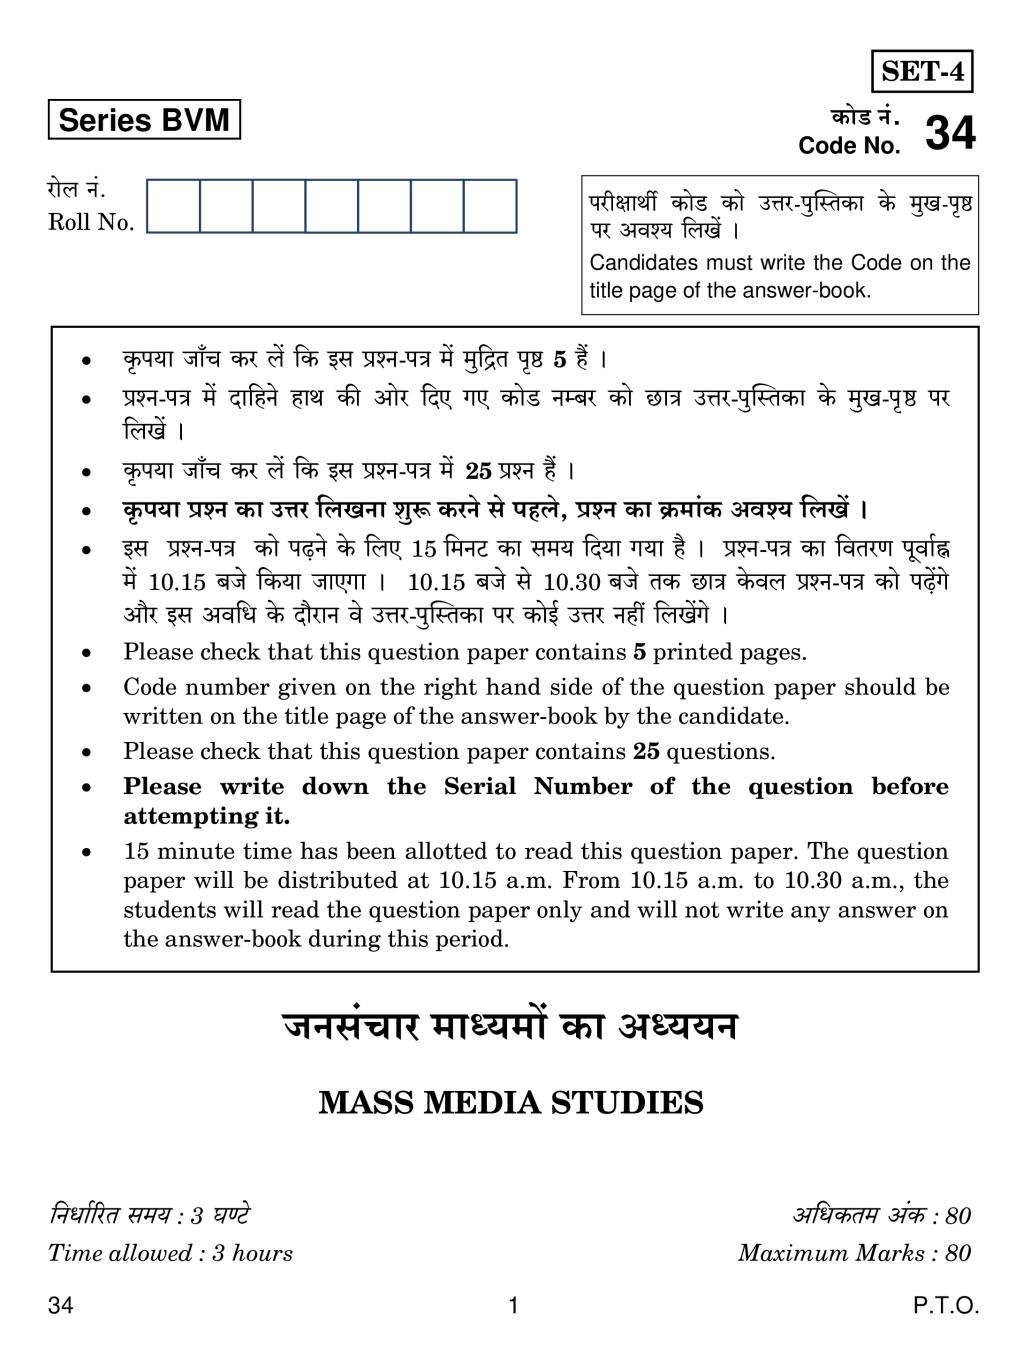 CBSE Class 12 Mass Media Studies Question Paper 2019 - Page 1